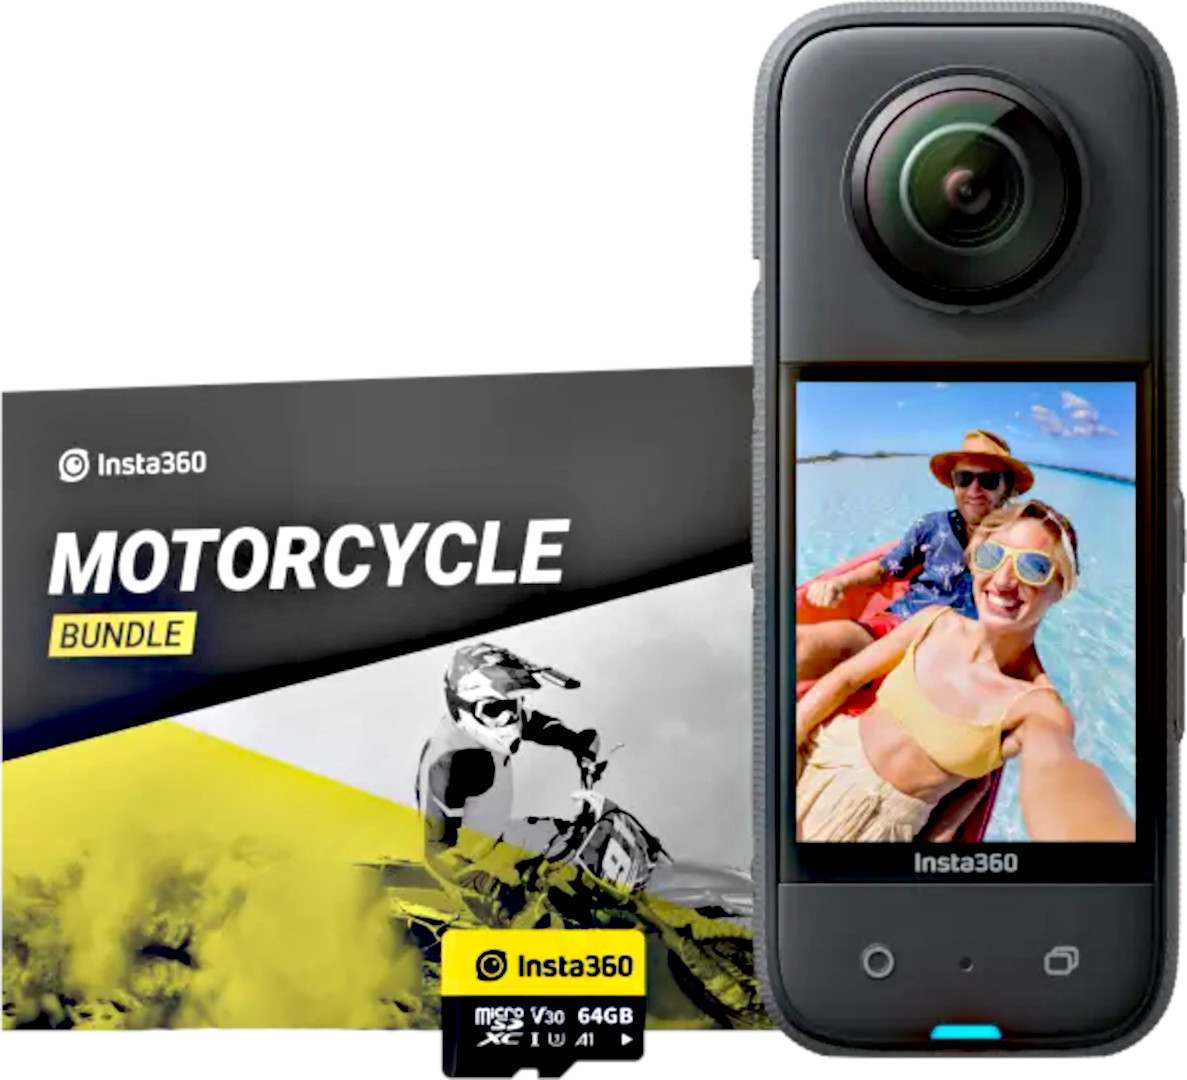 Buy Insta360 X3 360 Camera online at GP Pro